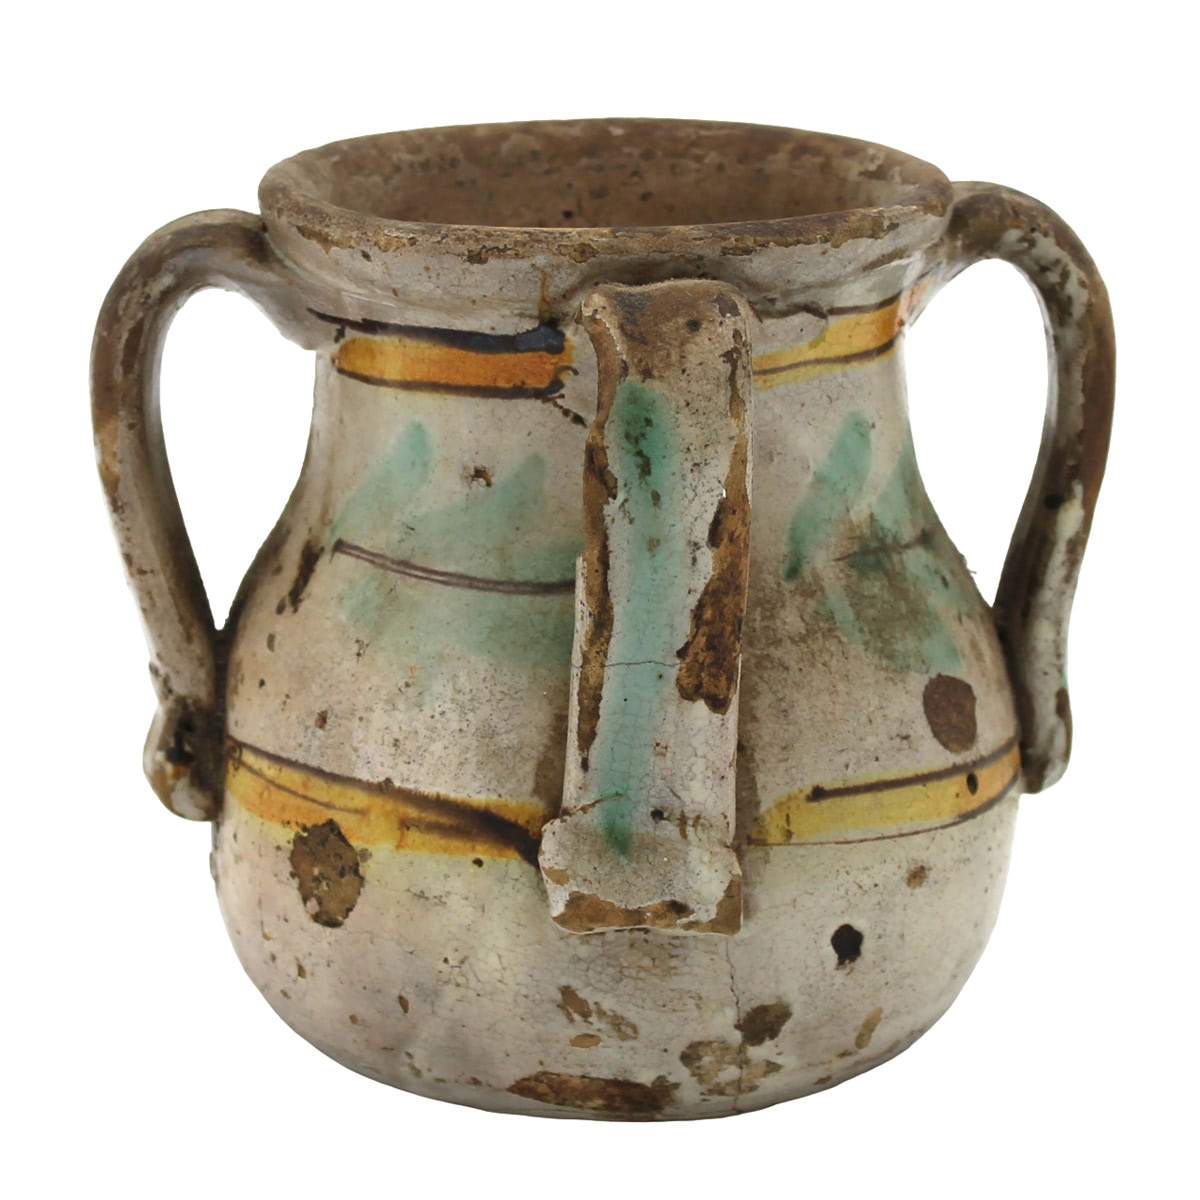 Piccola anfora a quattro manici - Small four-handled amphora